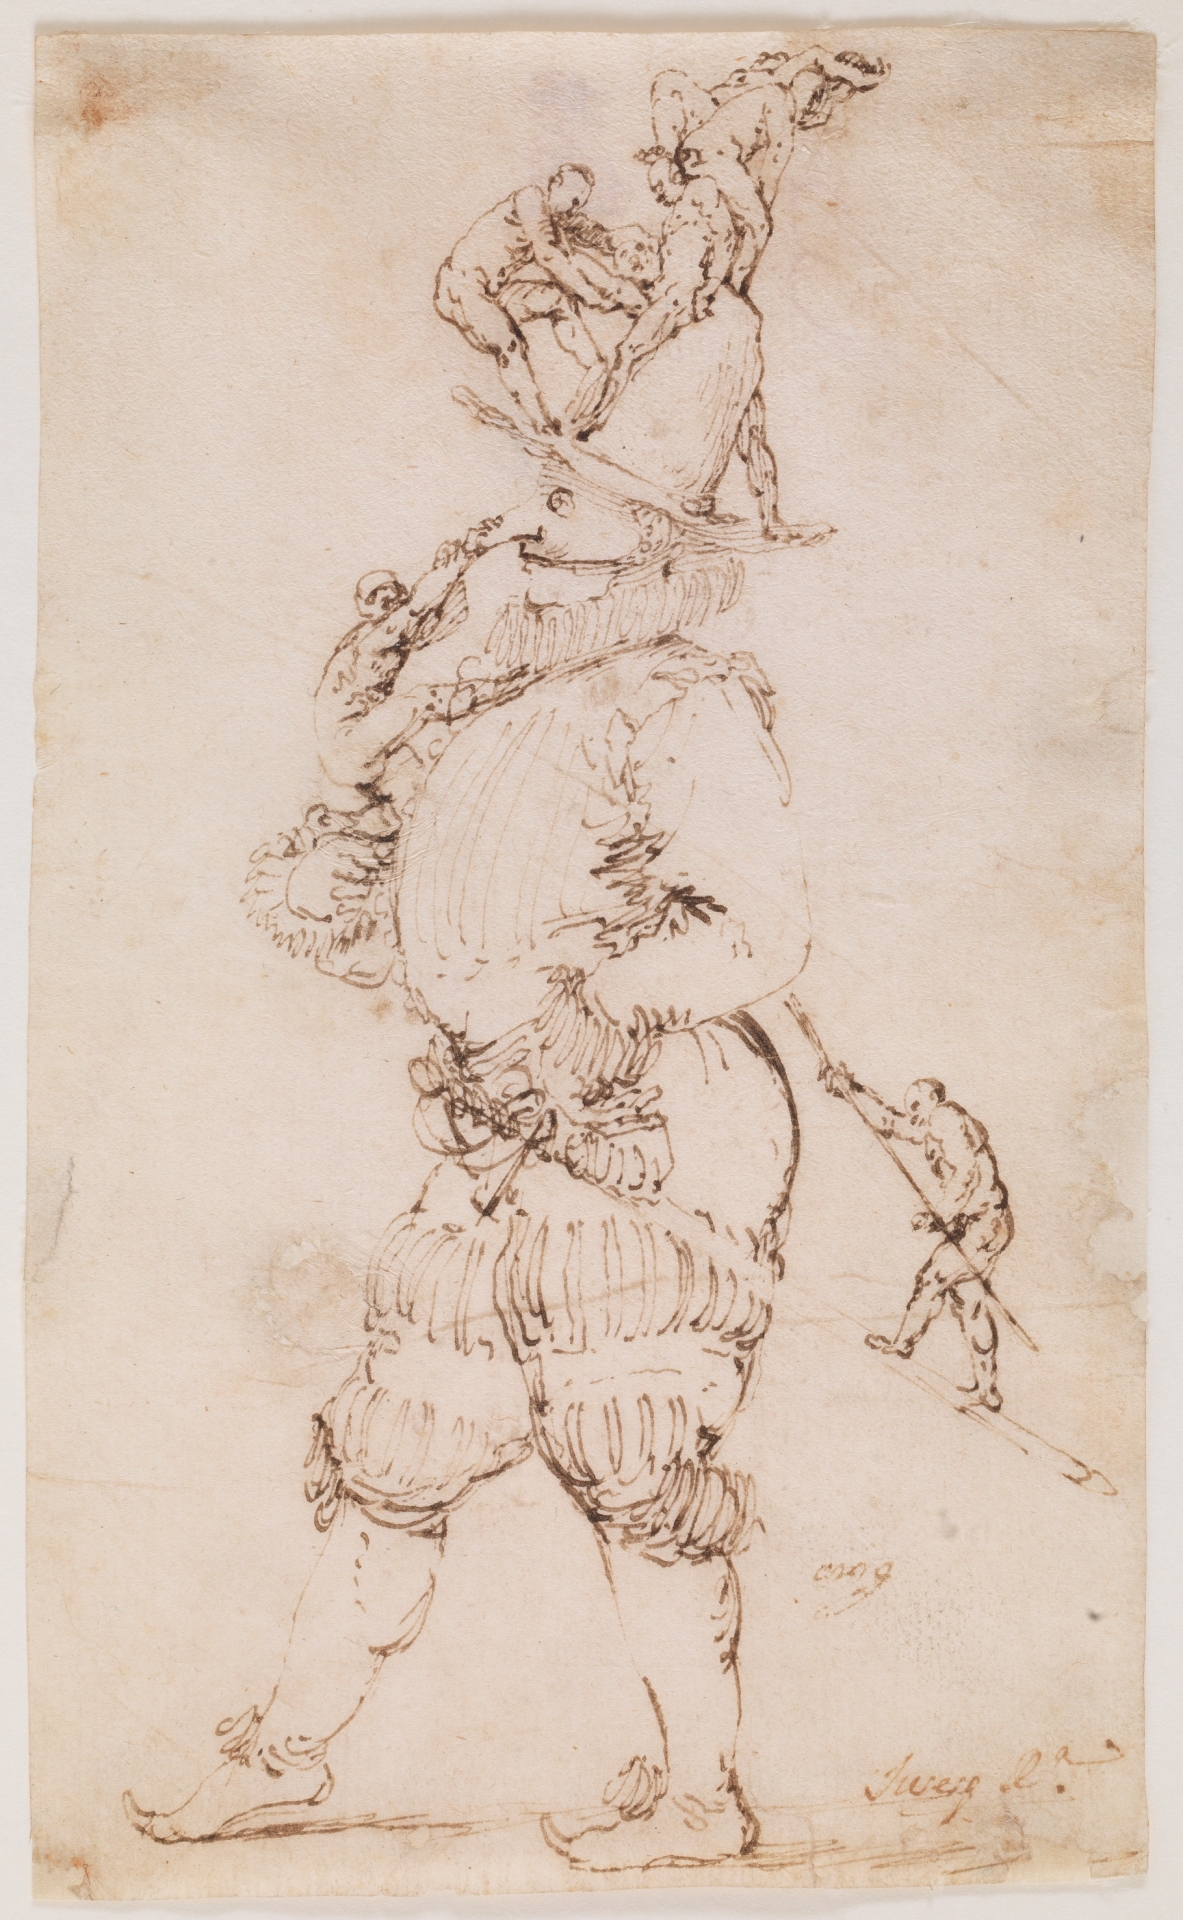 Jusepe de Ribera, A Masked Man